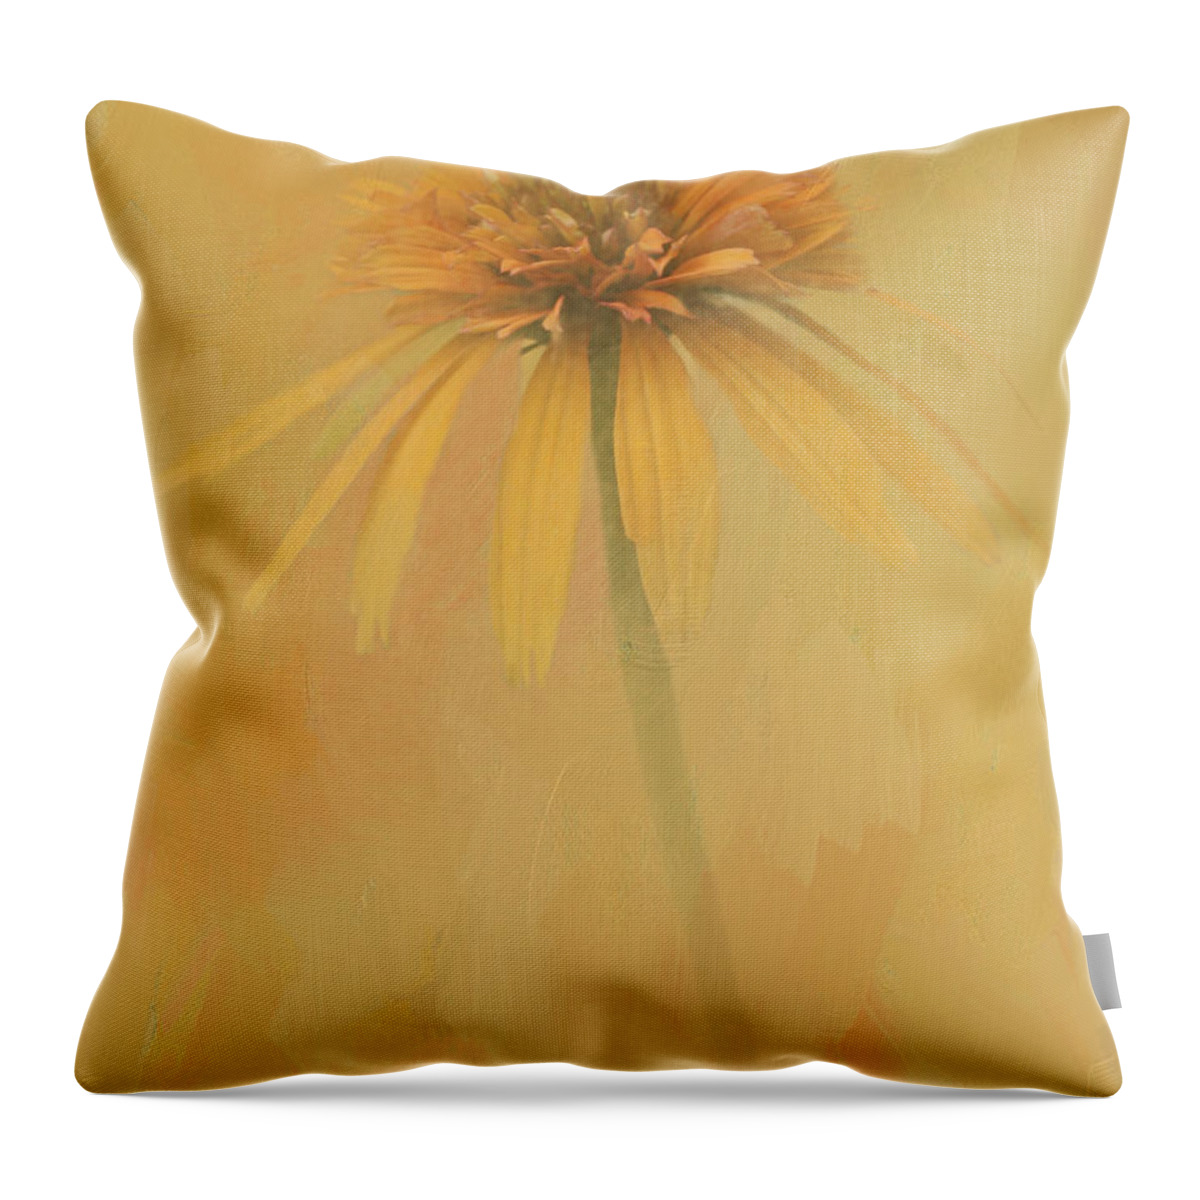 Coneflower Throw Pillow featuring the digital art Golden Sunshine by Jayne Carney